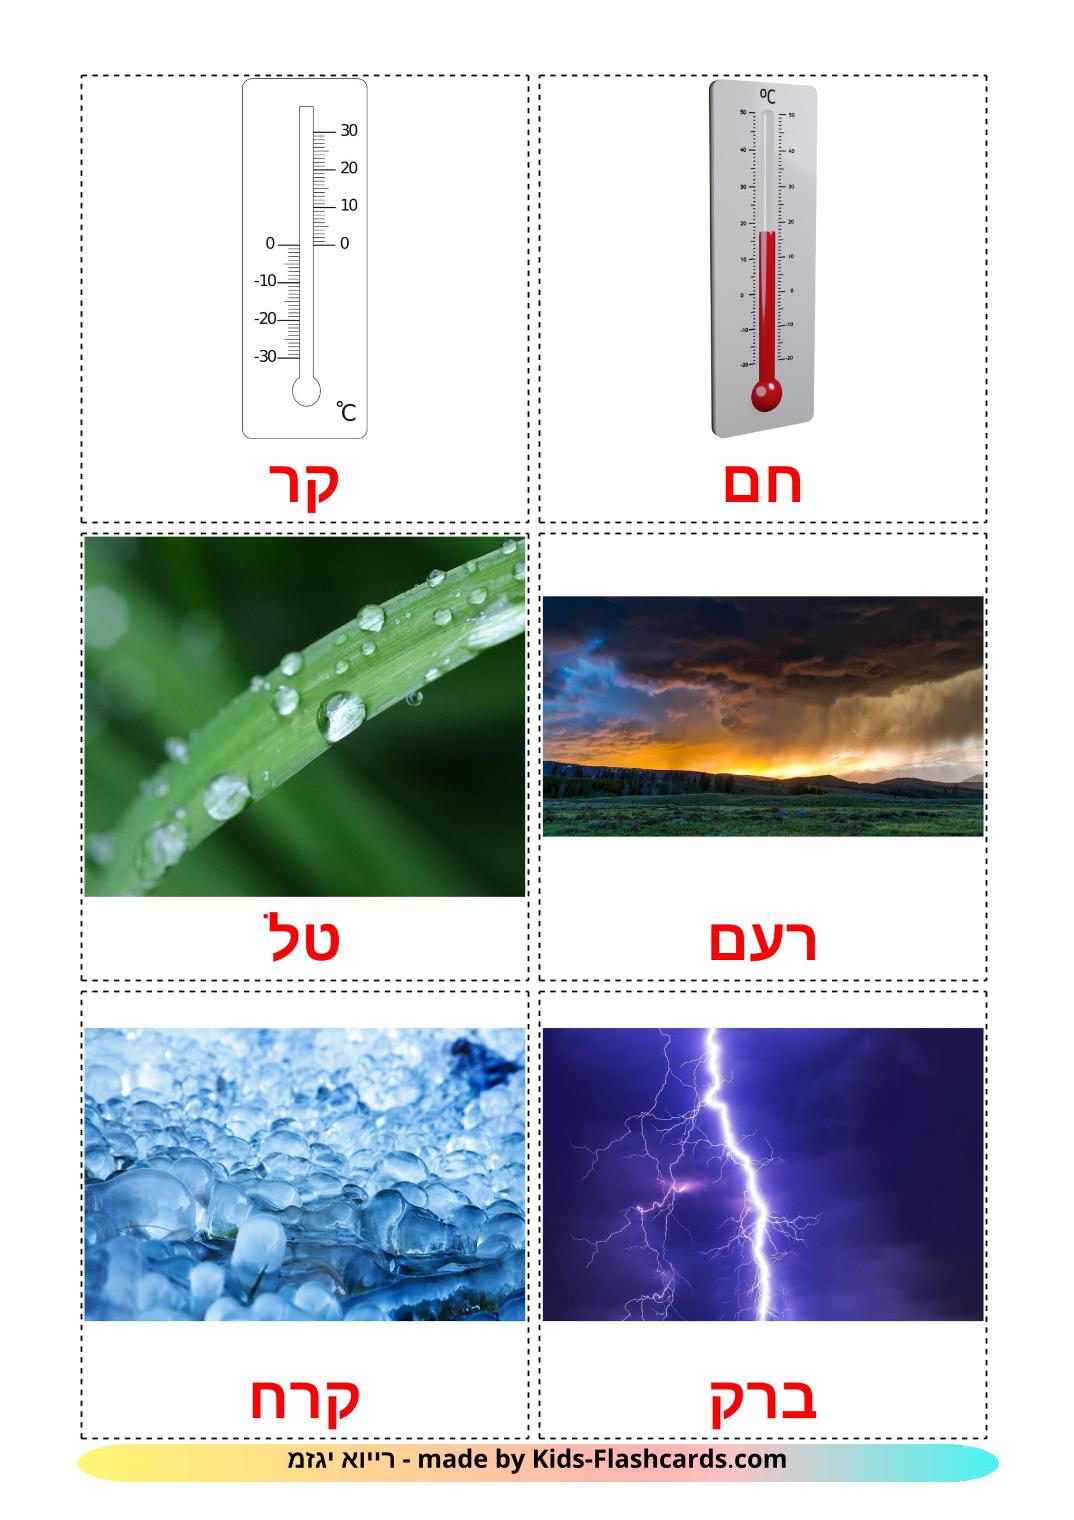 Tempo atmosferico - 31 flashcards ebraico stampabili gratuitamente